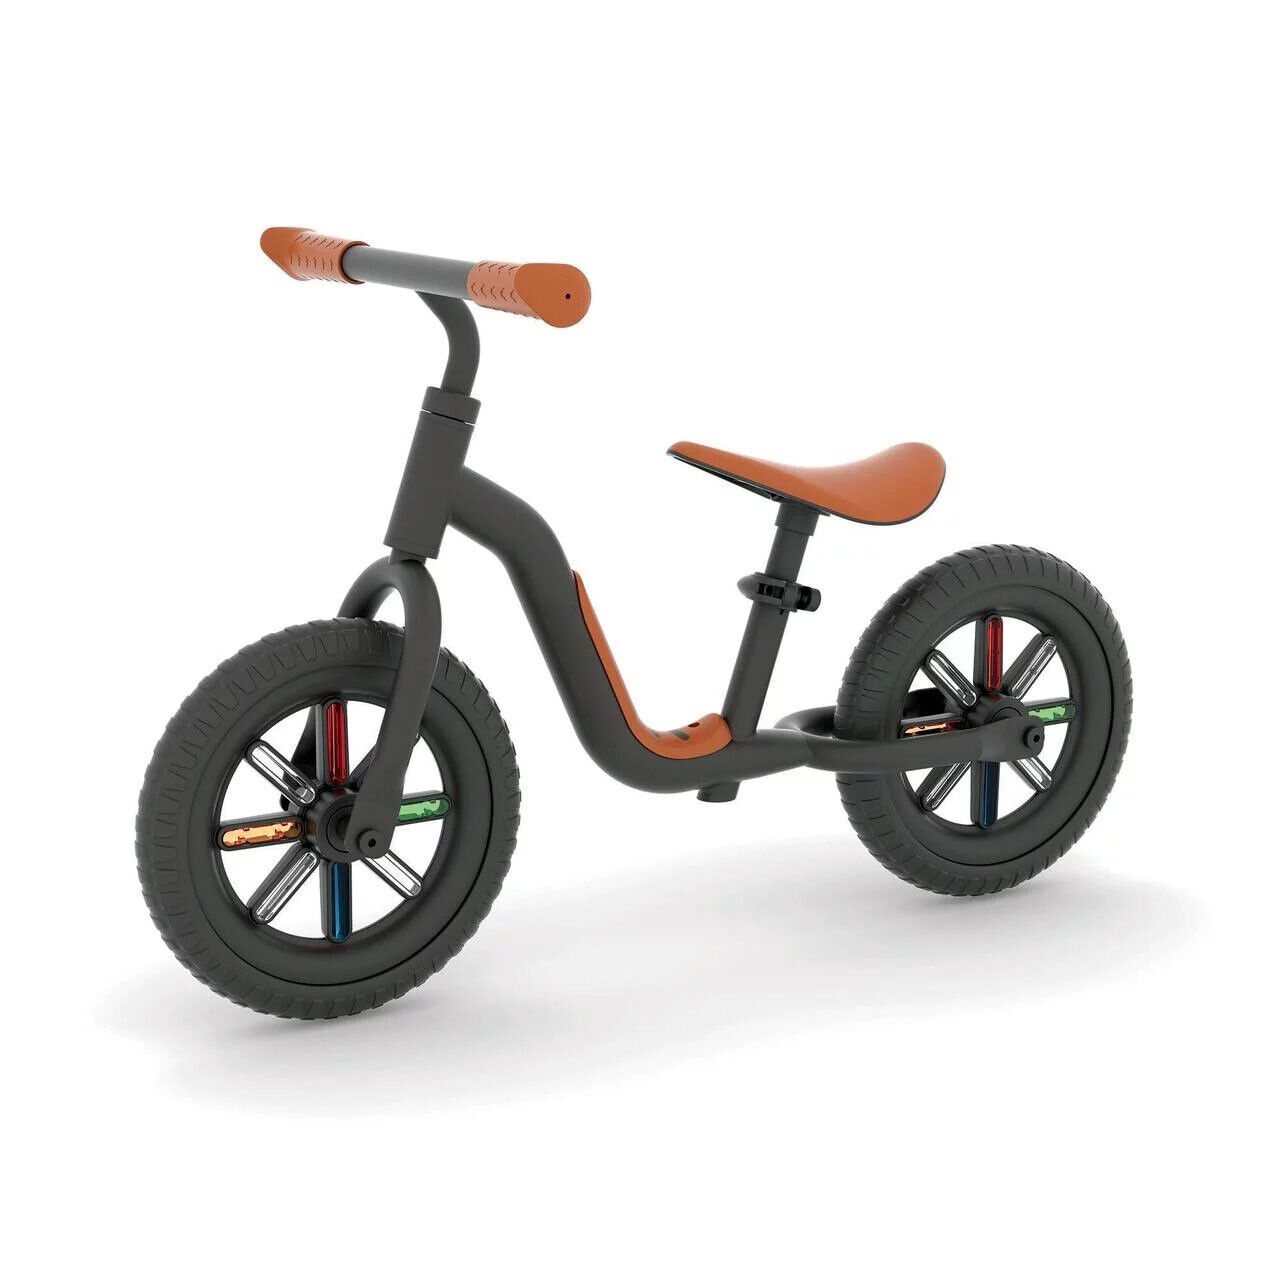 10' Balance Bike for Kids 1.5 years and older, Lightweight Toddler Bike